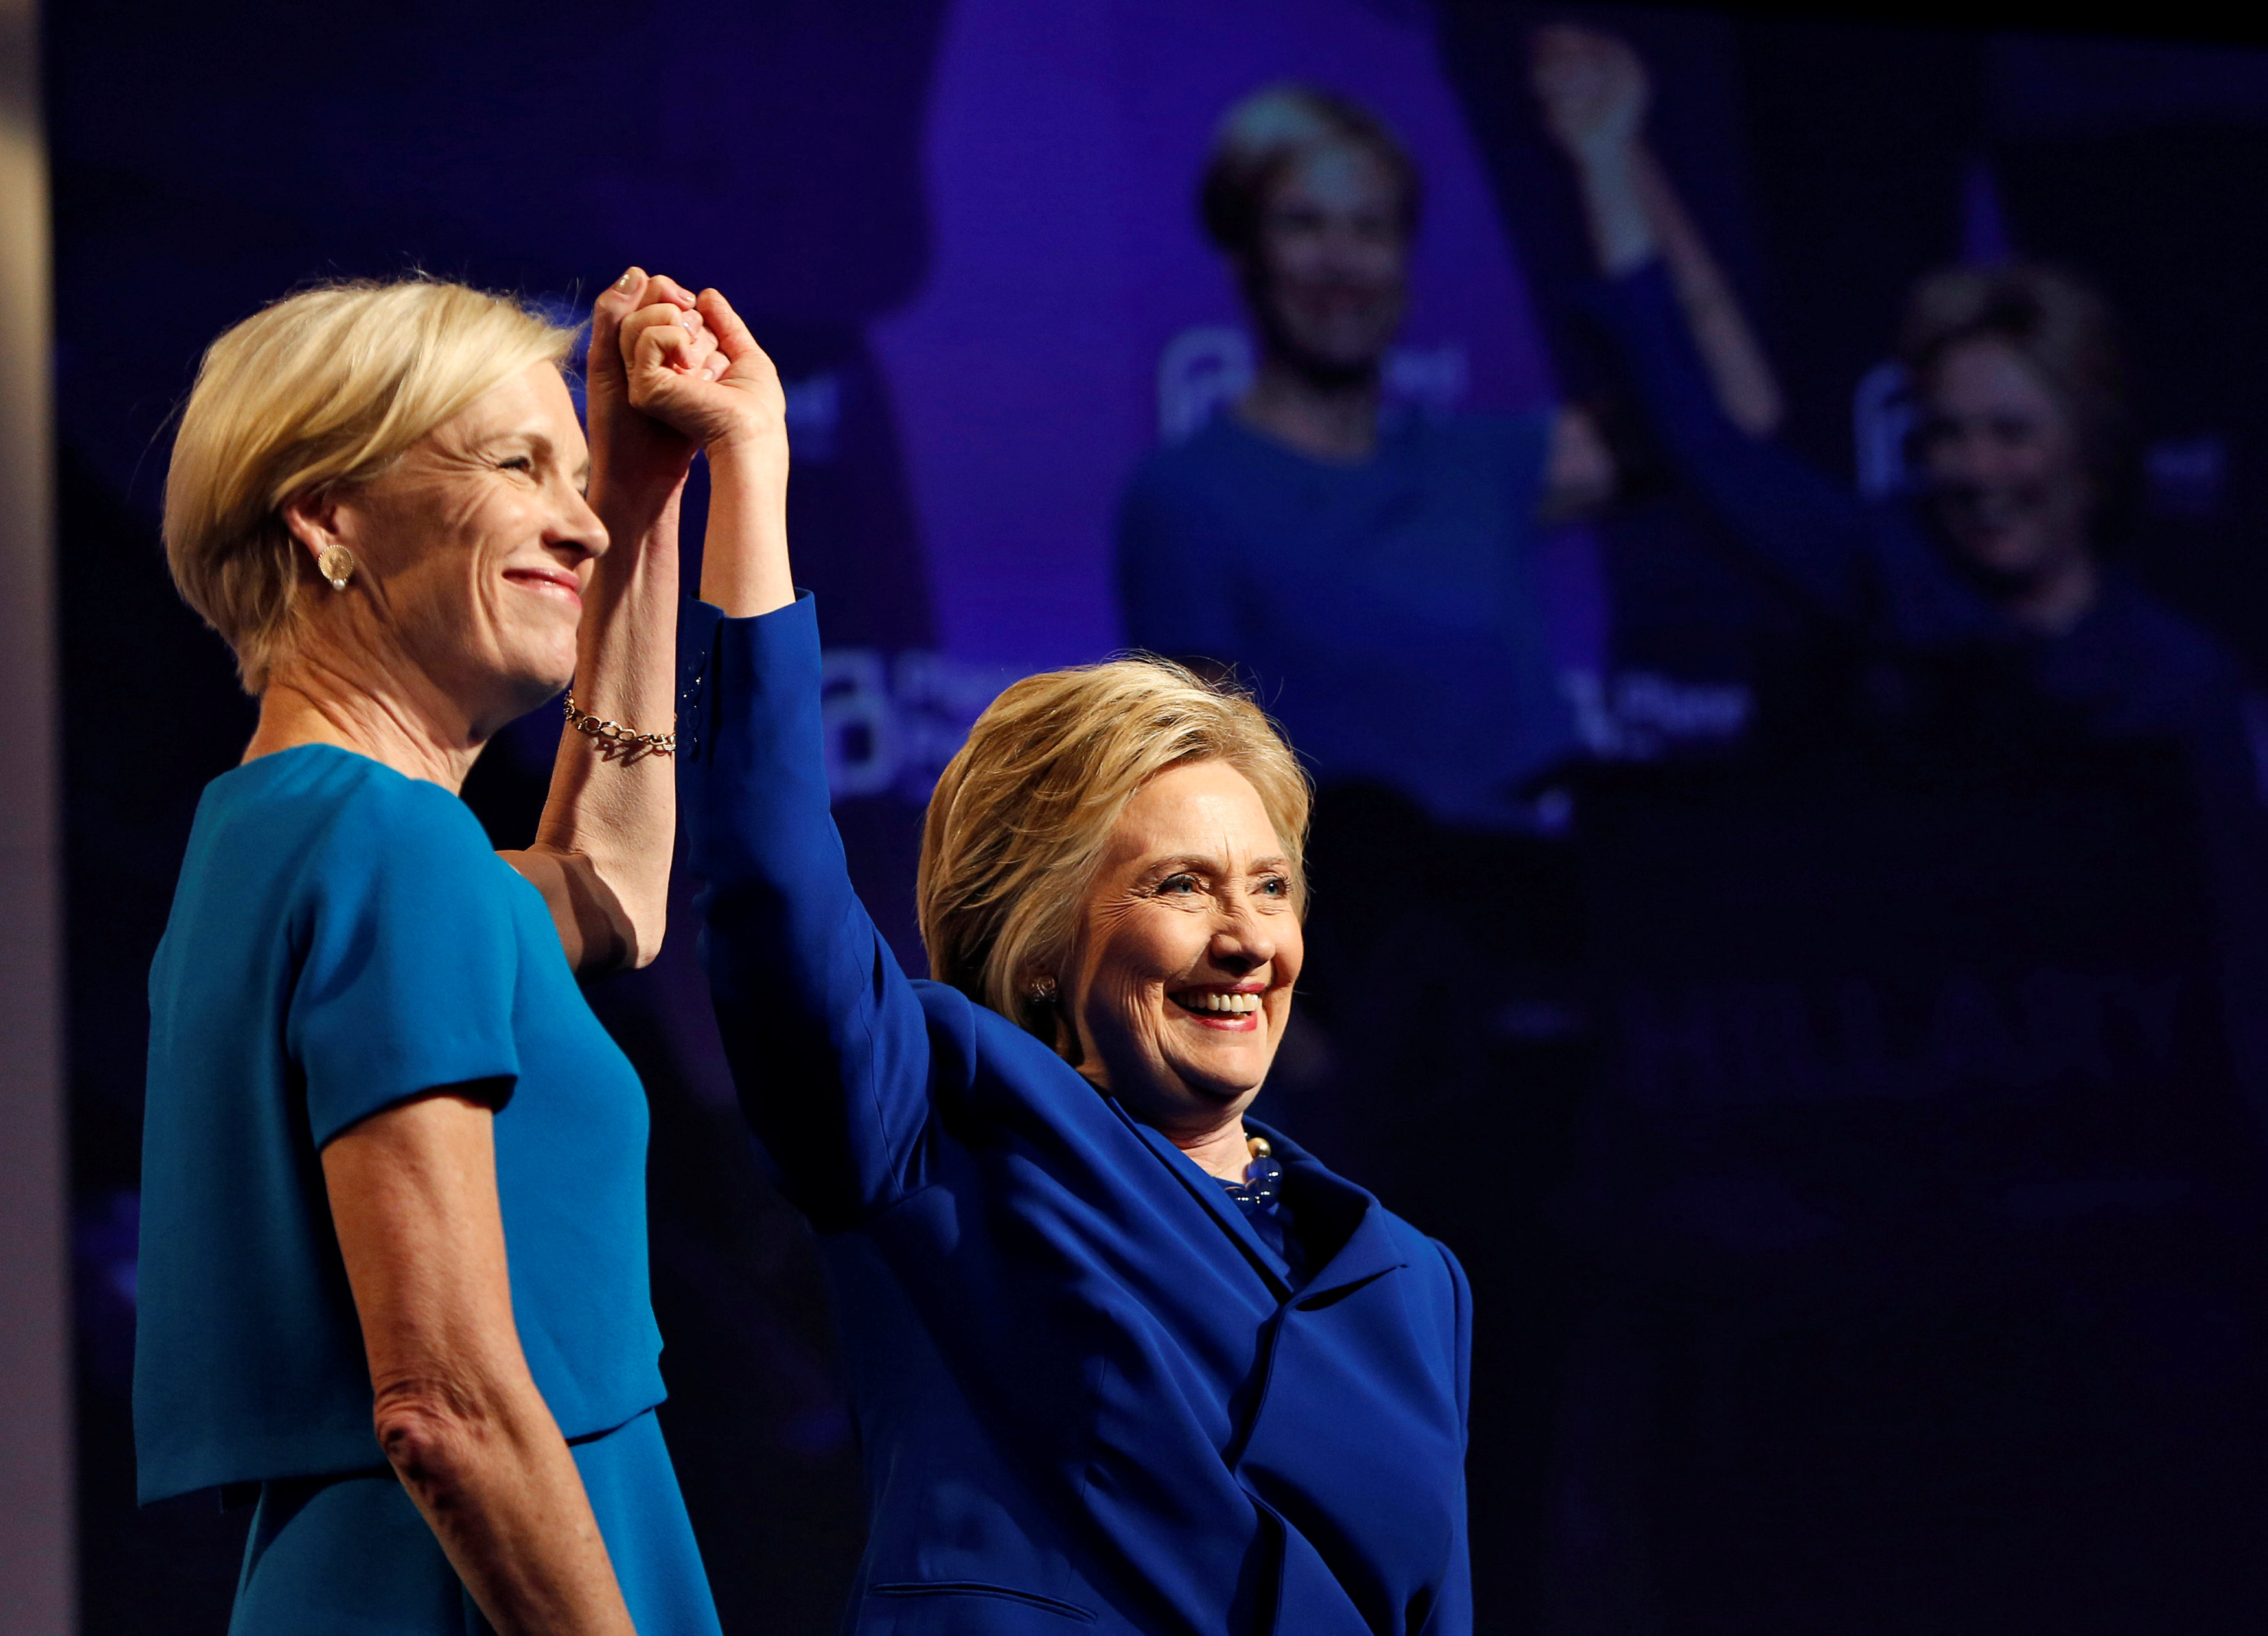 Seeking Democratic Party unity, Clinton meets with Warren